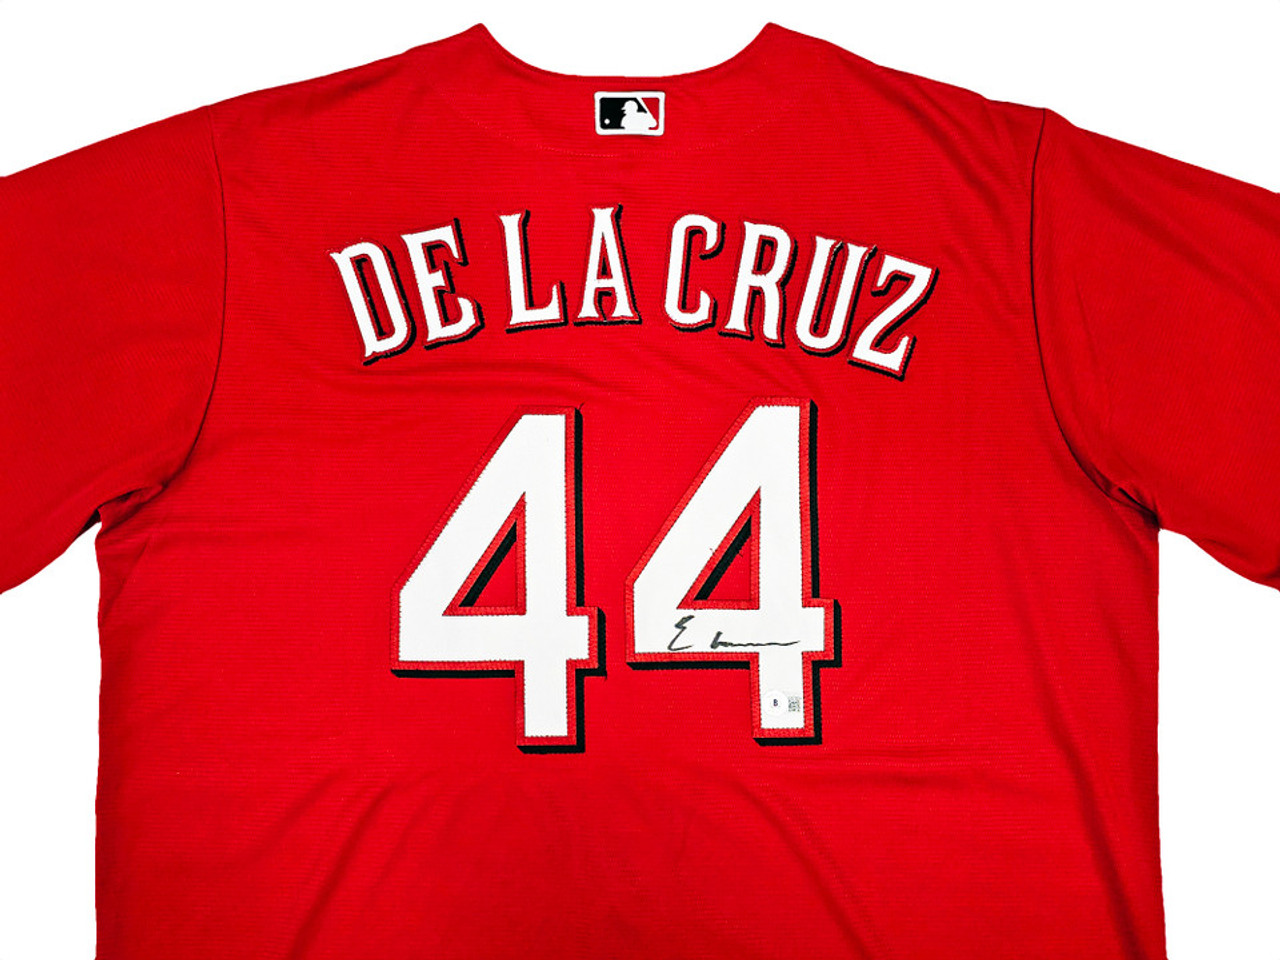 Elly de La Cruz Signed Cincinnati Reds Nike Baseball Jersey BAS Itp